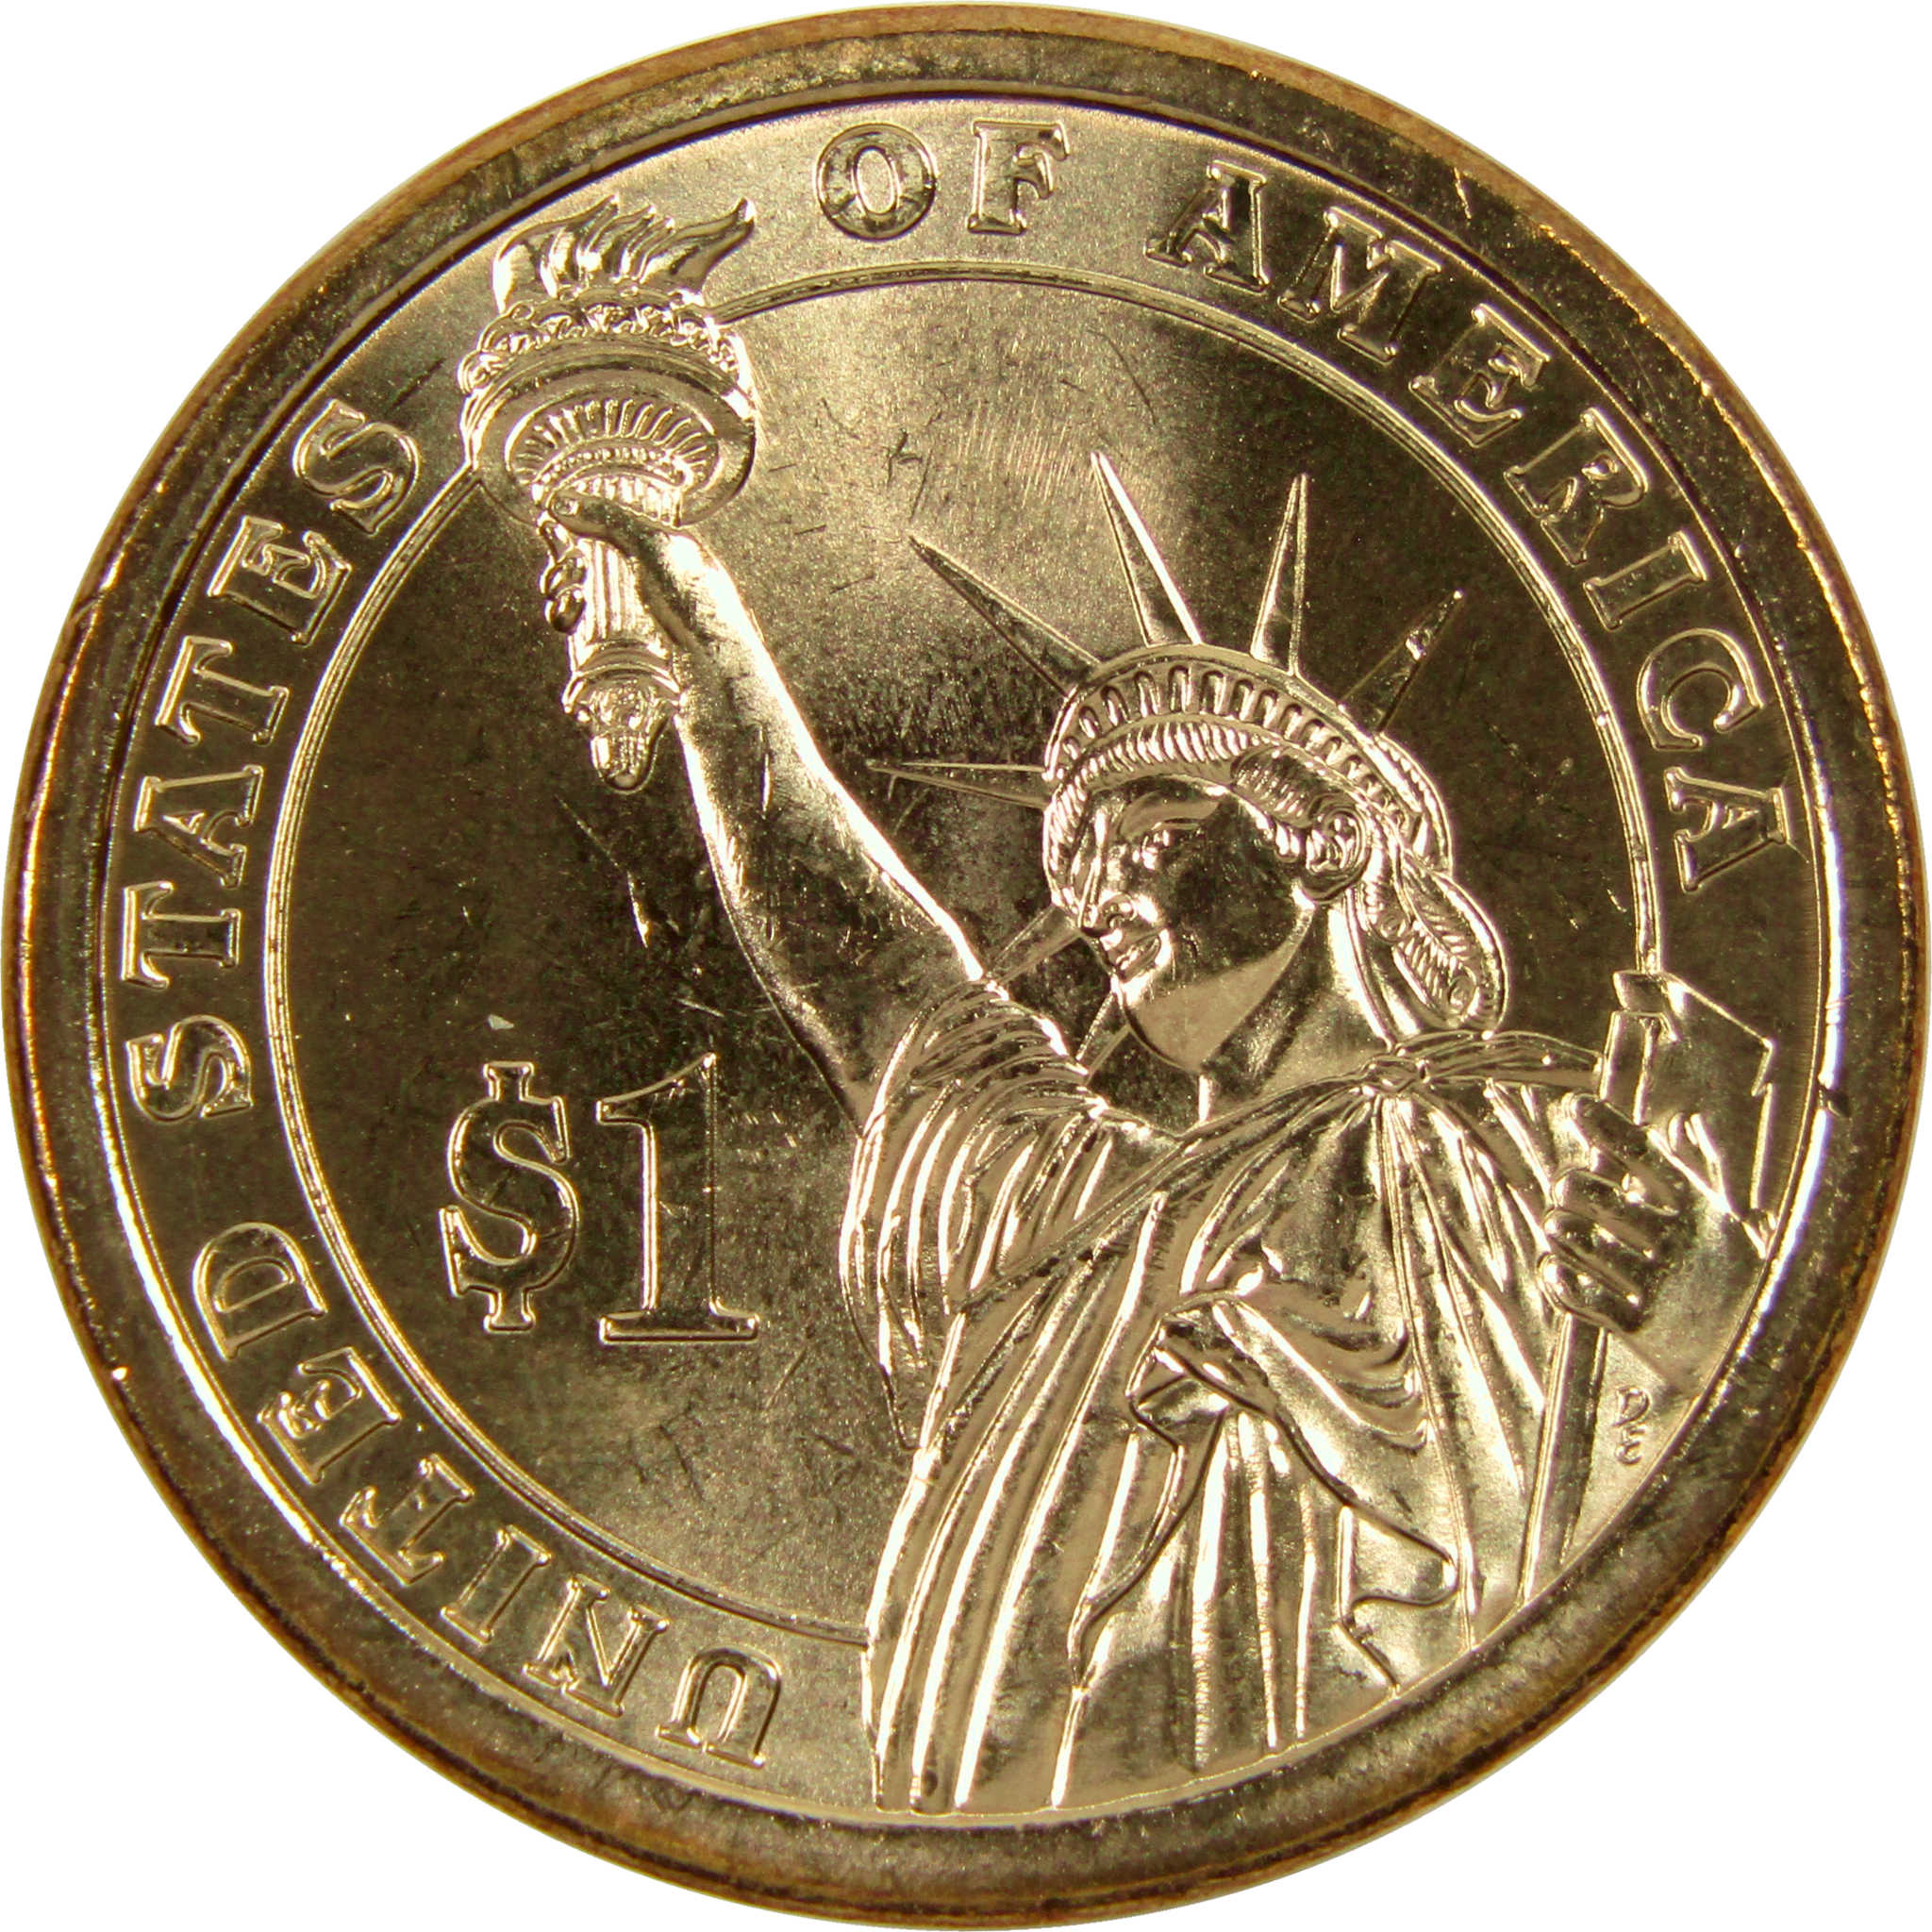 2007 P George Washington Presidential Dollar BU Uncirculated $1 Coin